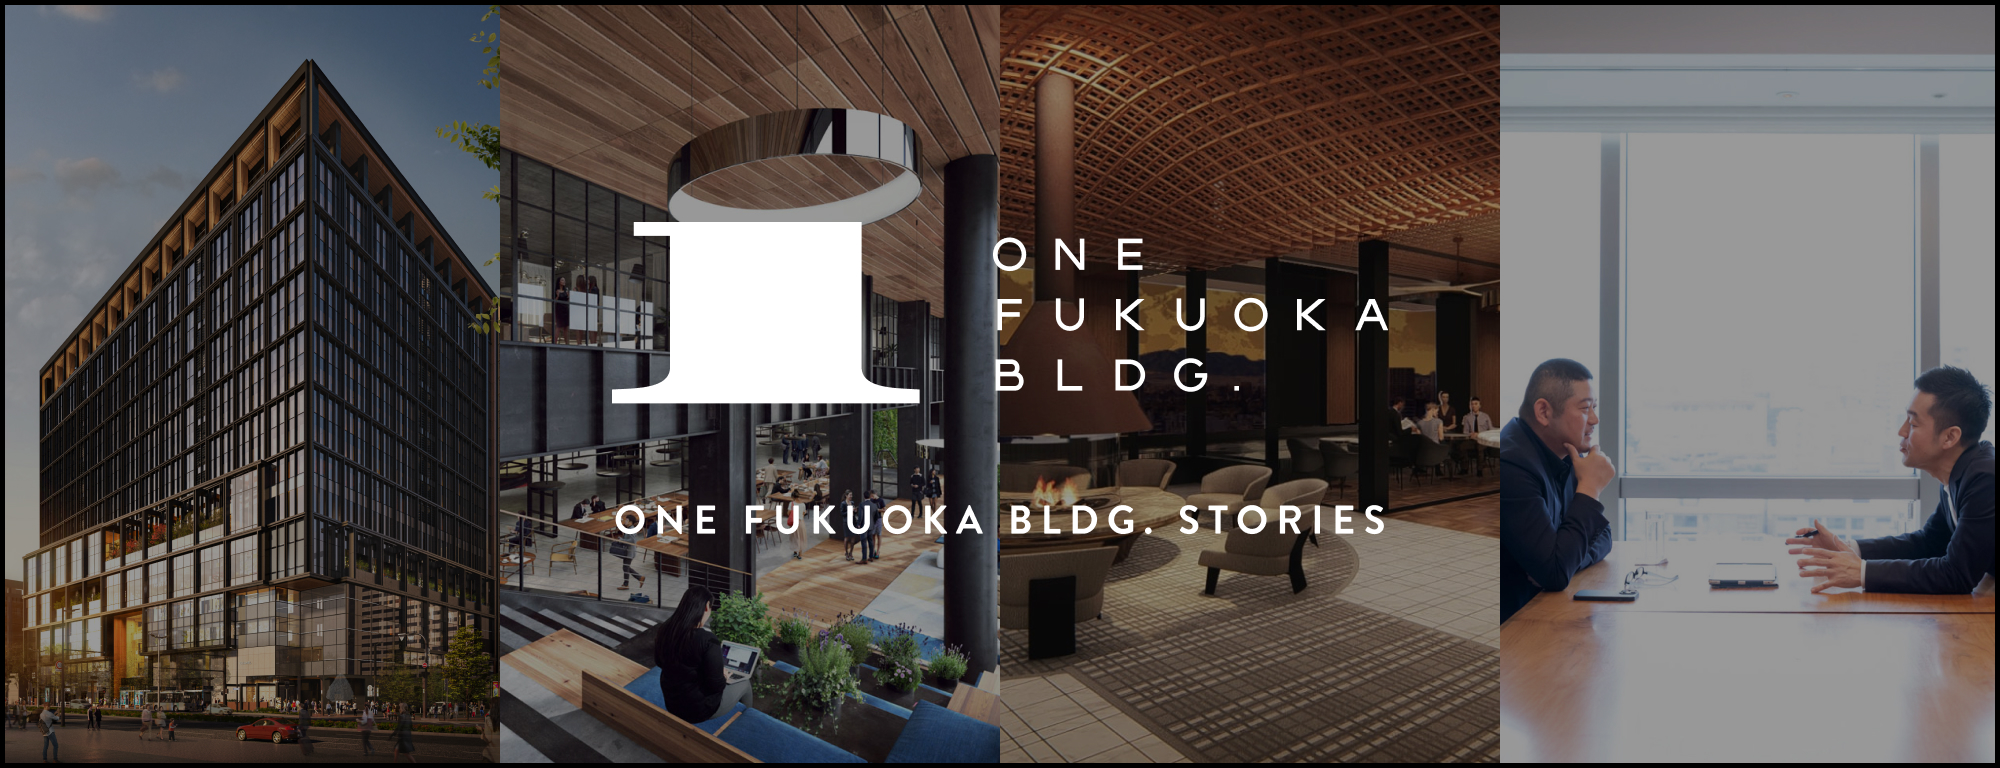 ONE FUKUOKA BLDG. STORIES